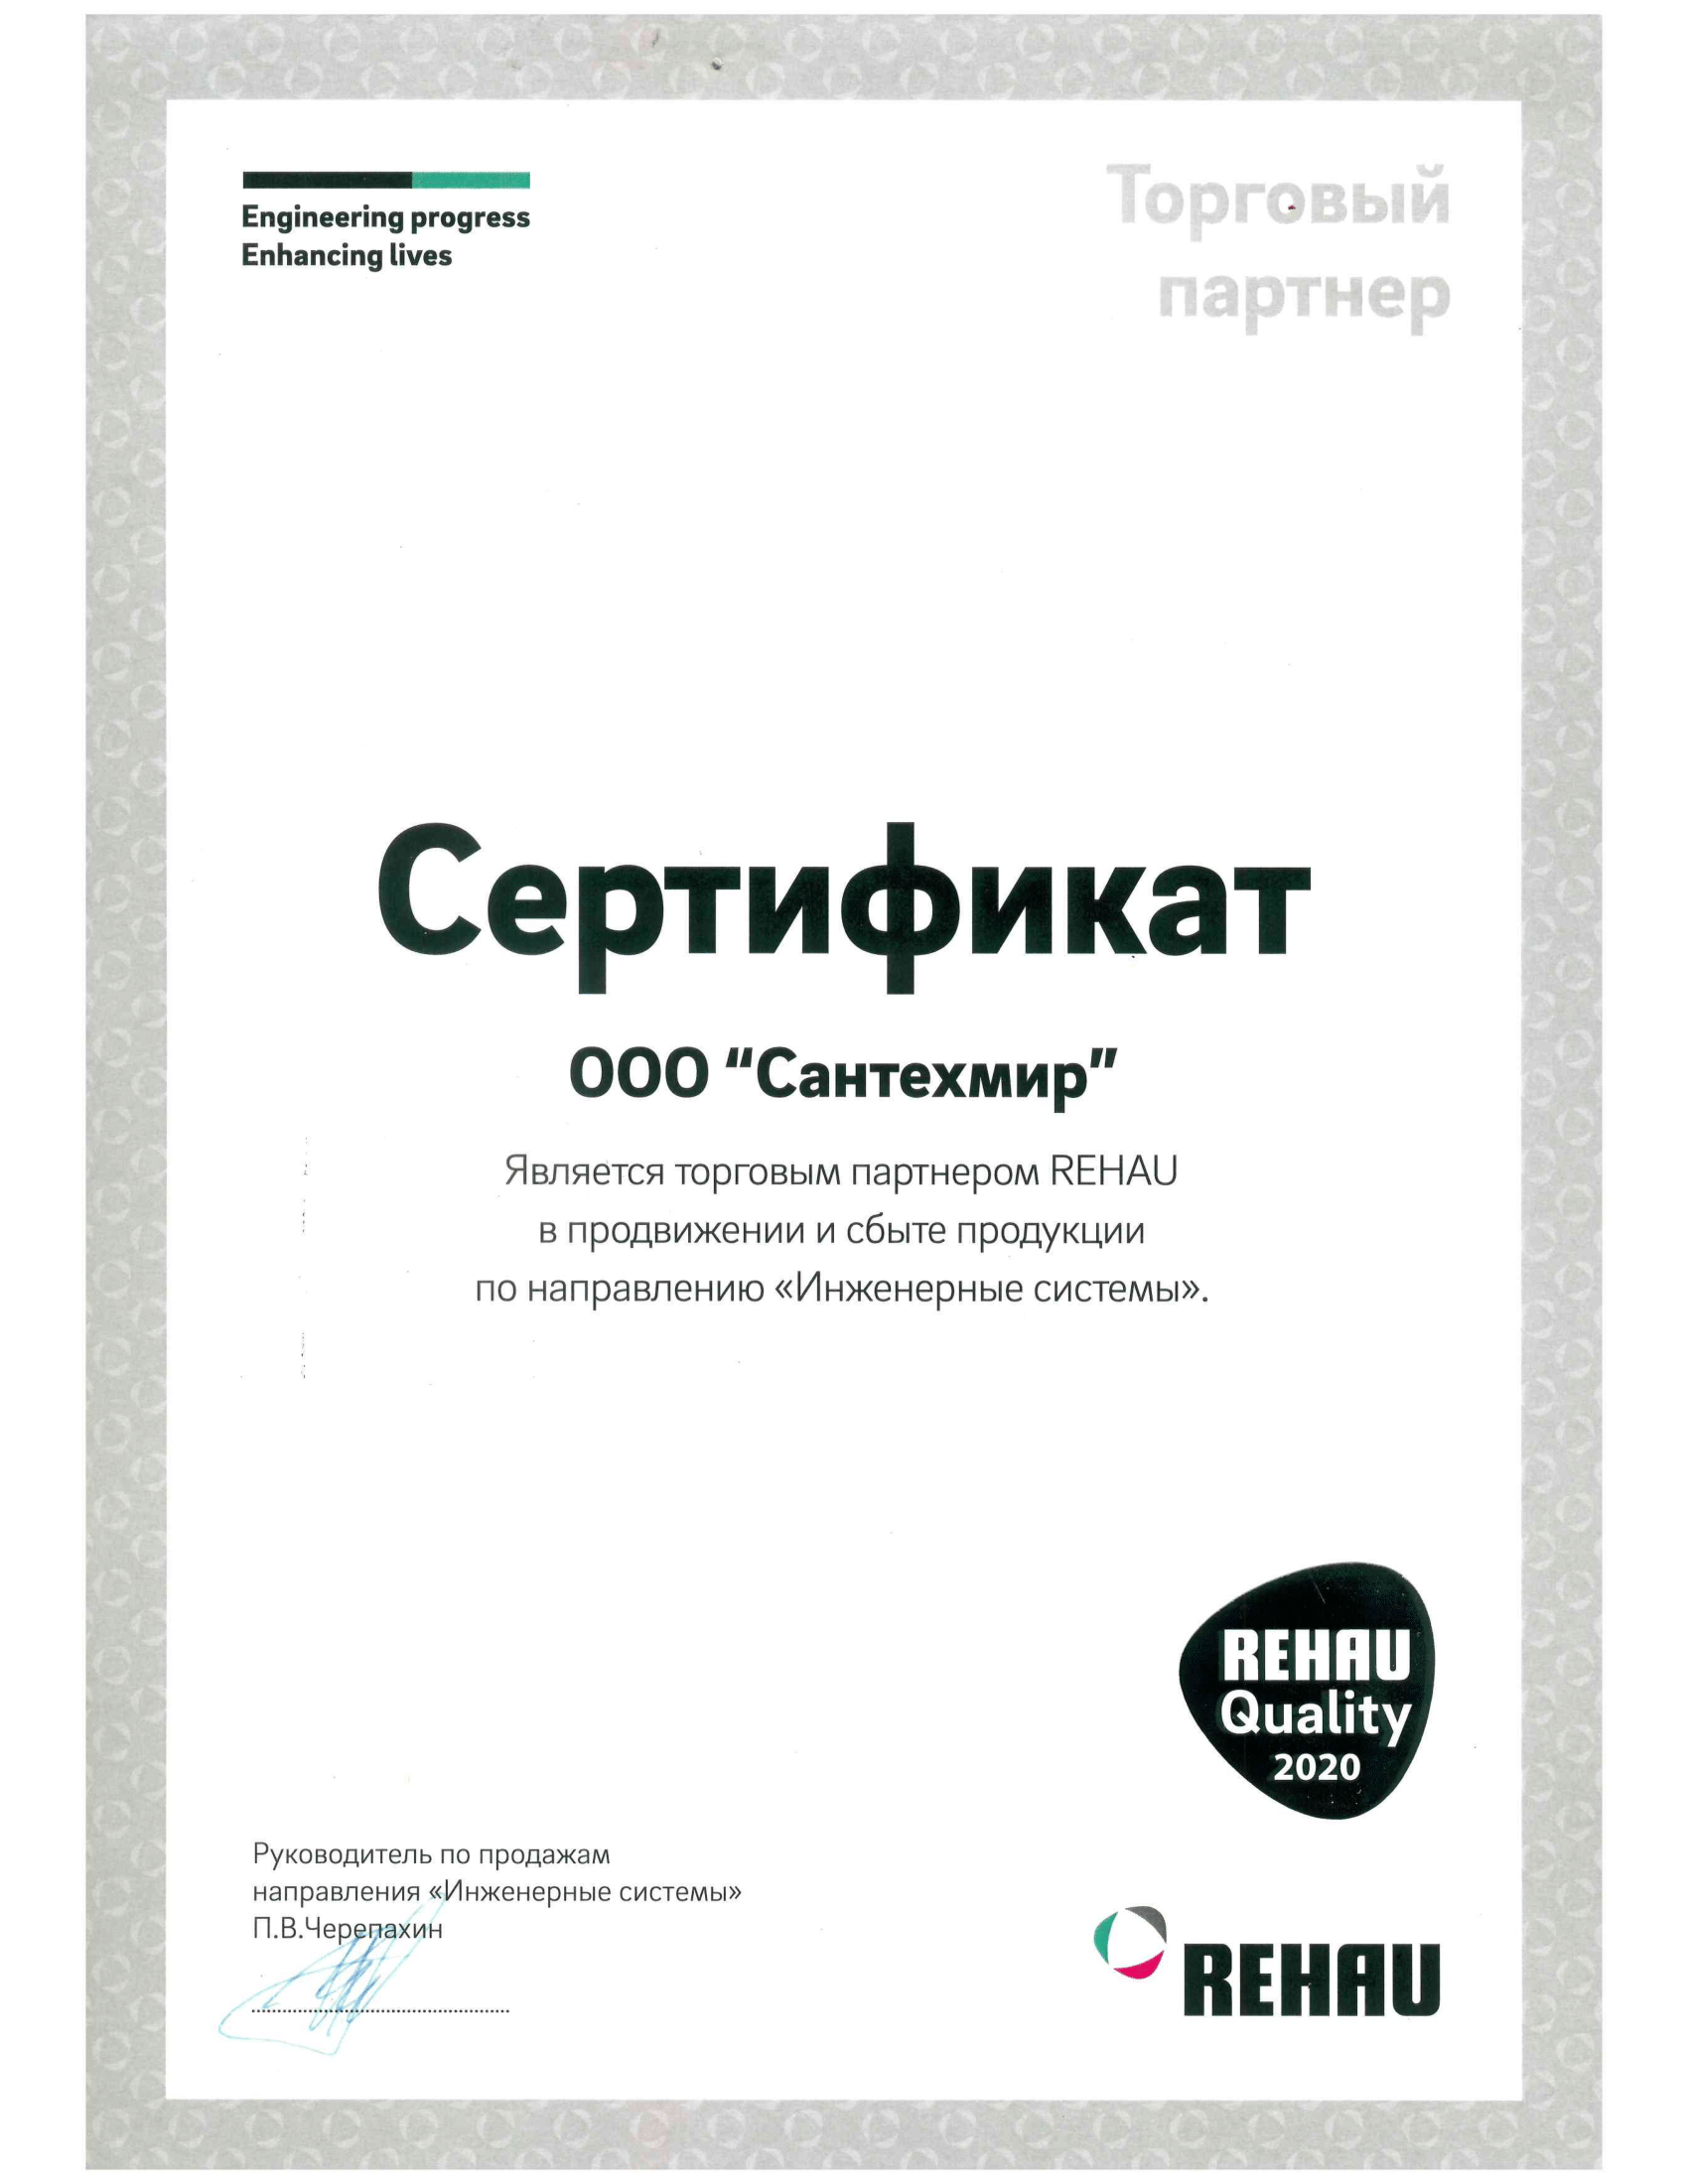 Rehau (сертификат за 2020 год)